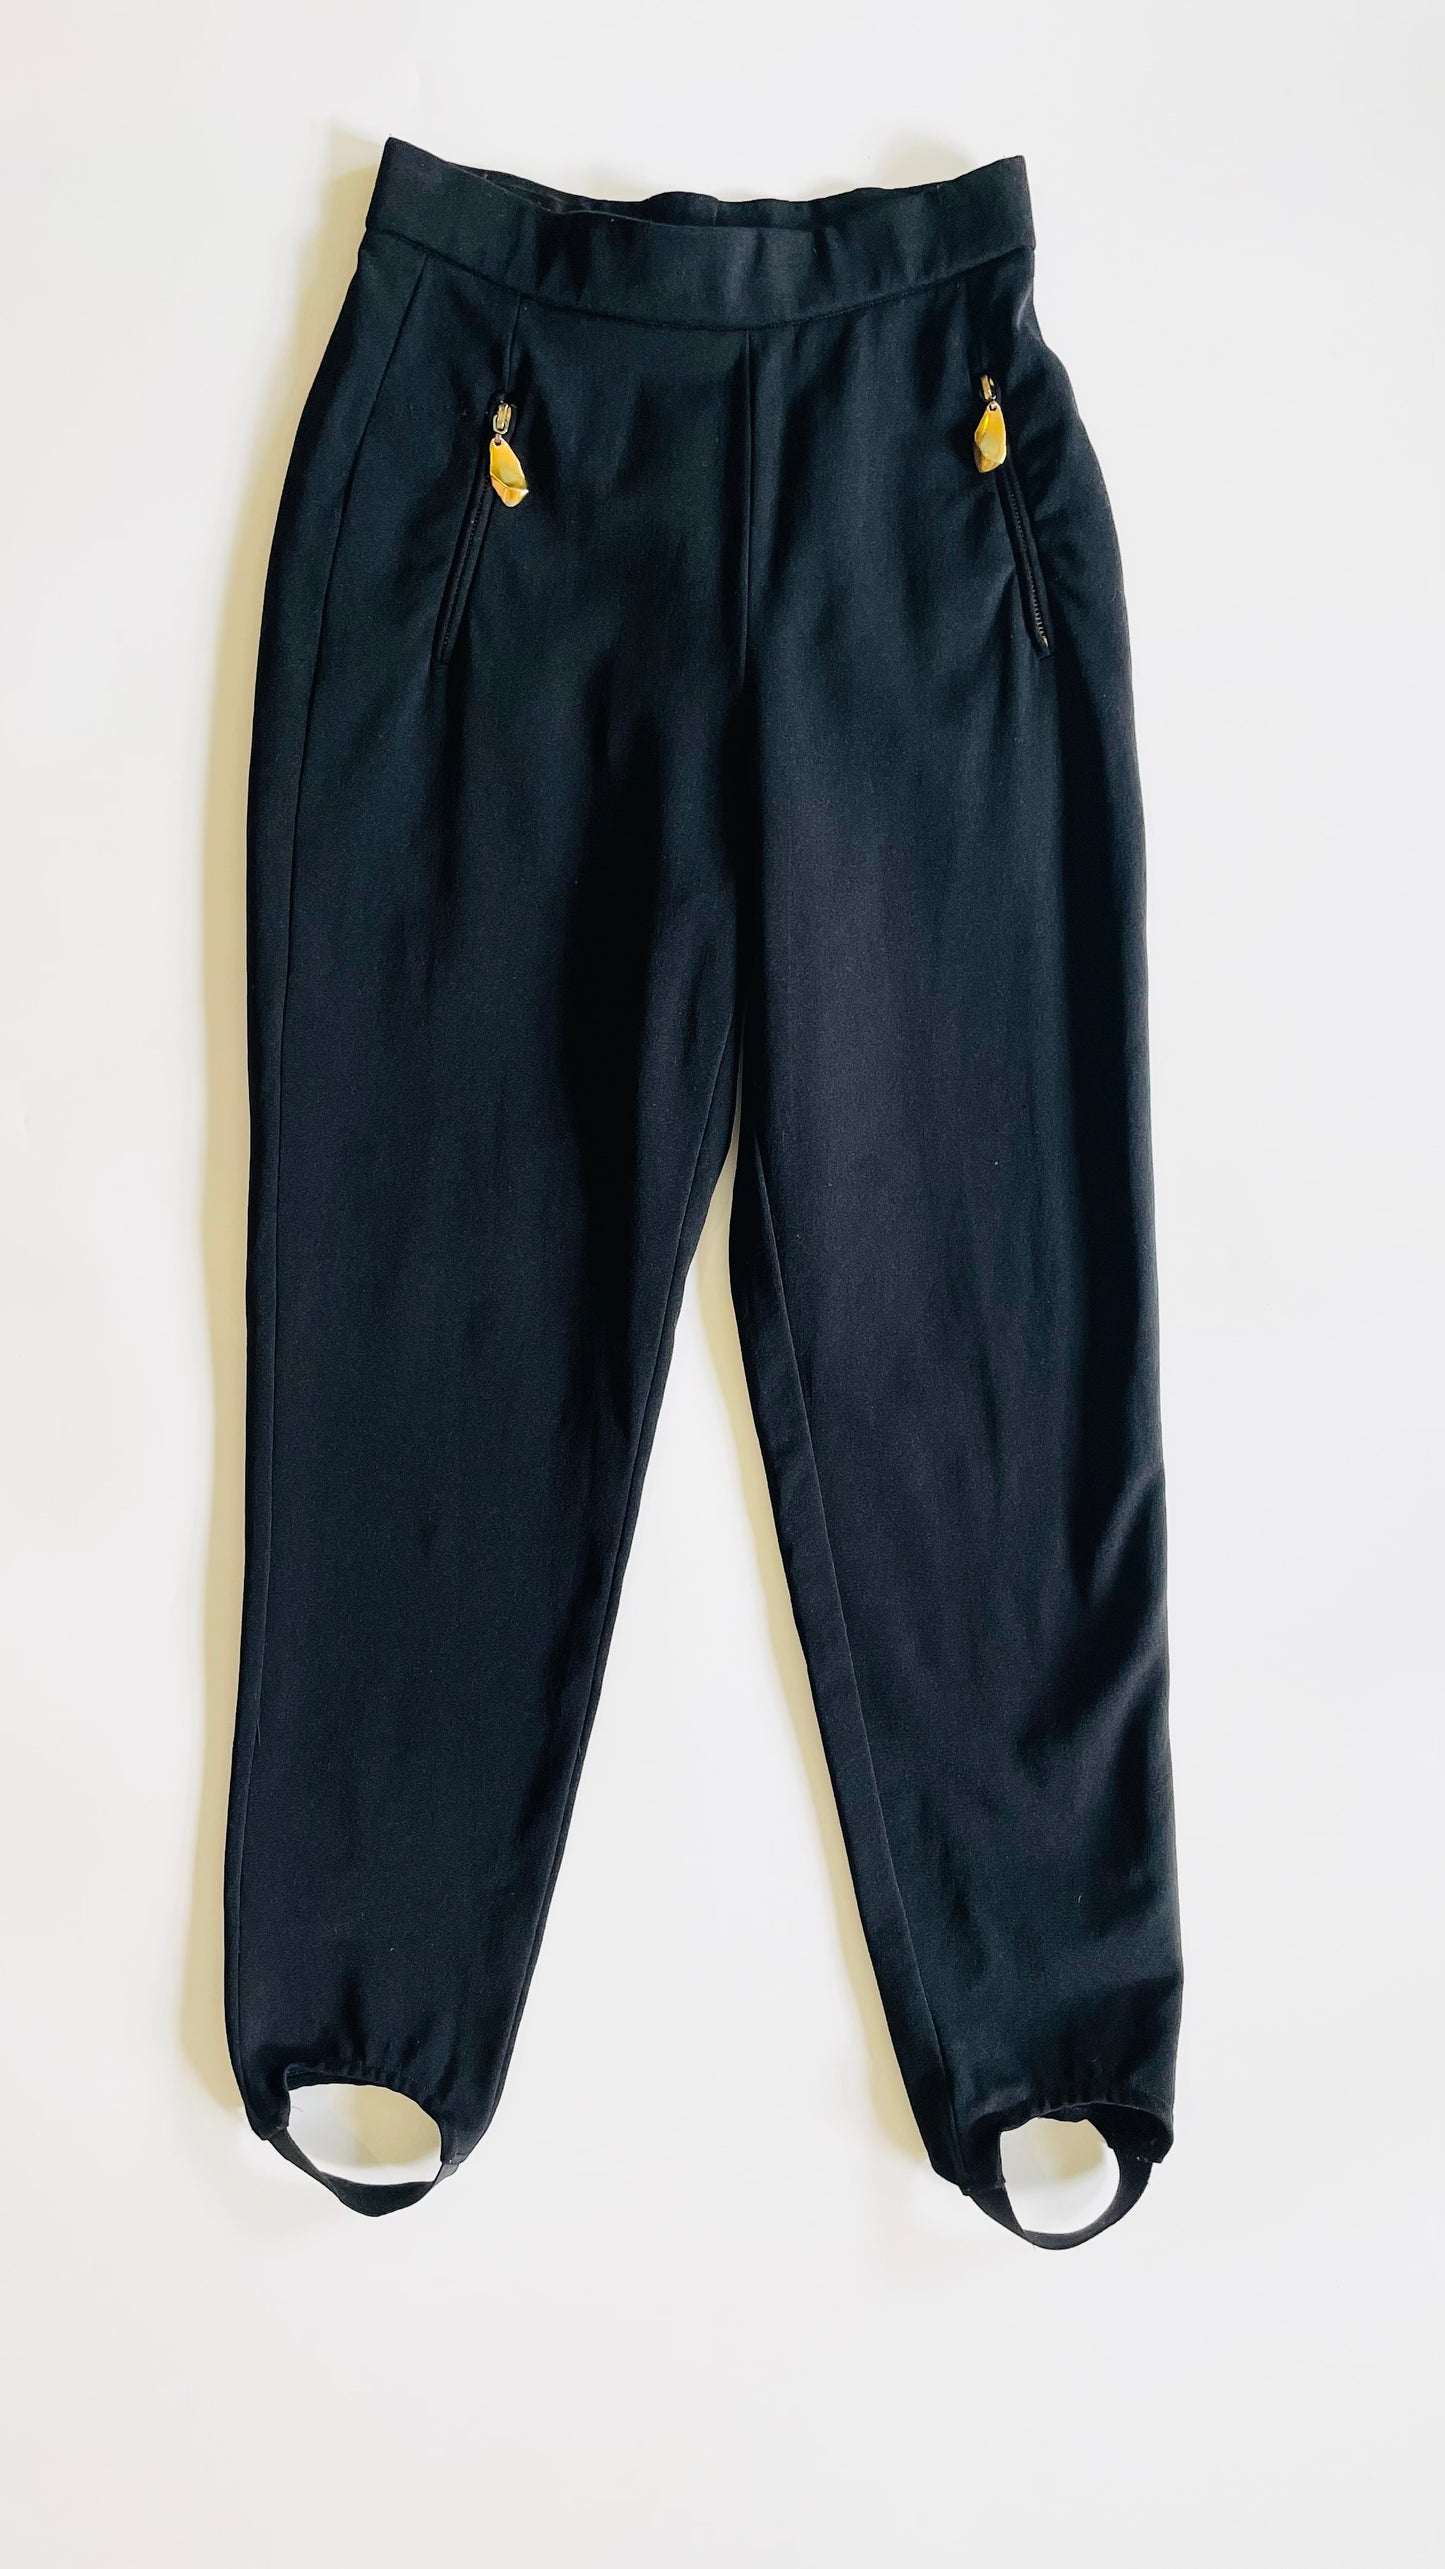 Vintage 90s black Donna Karan New York knit stirrup trousers - Size 8